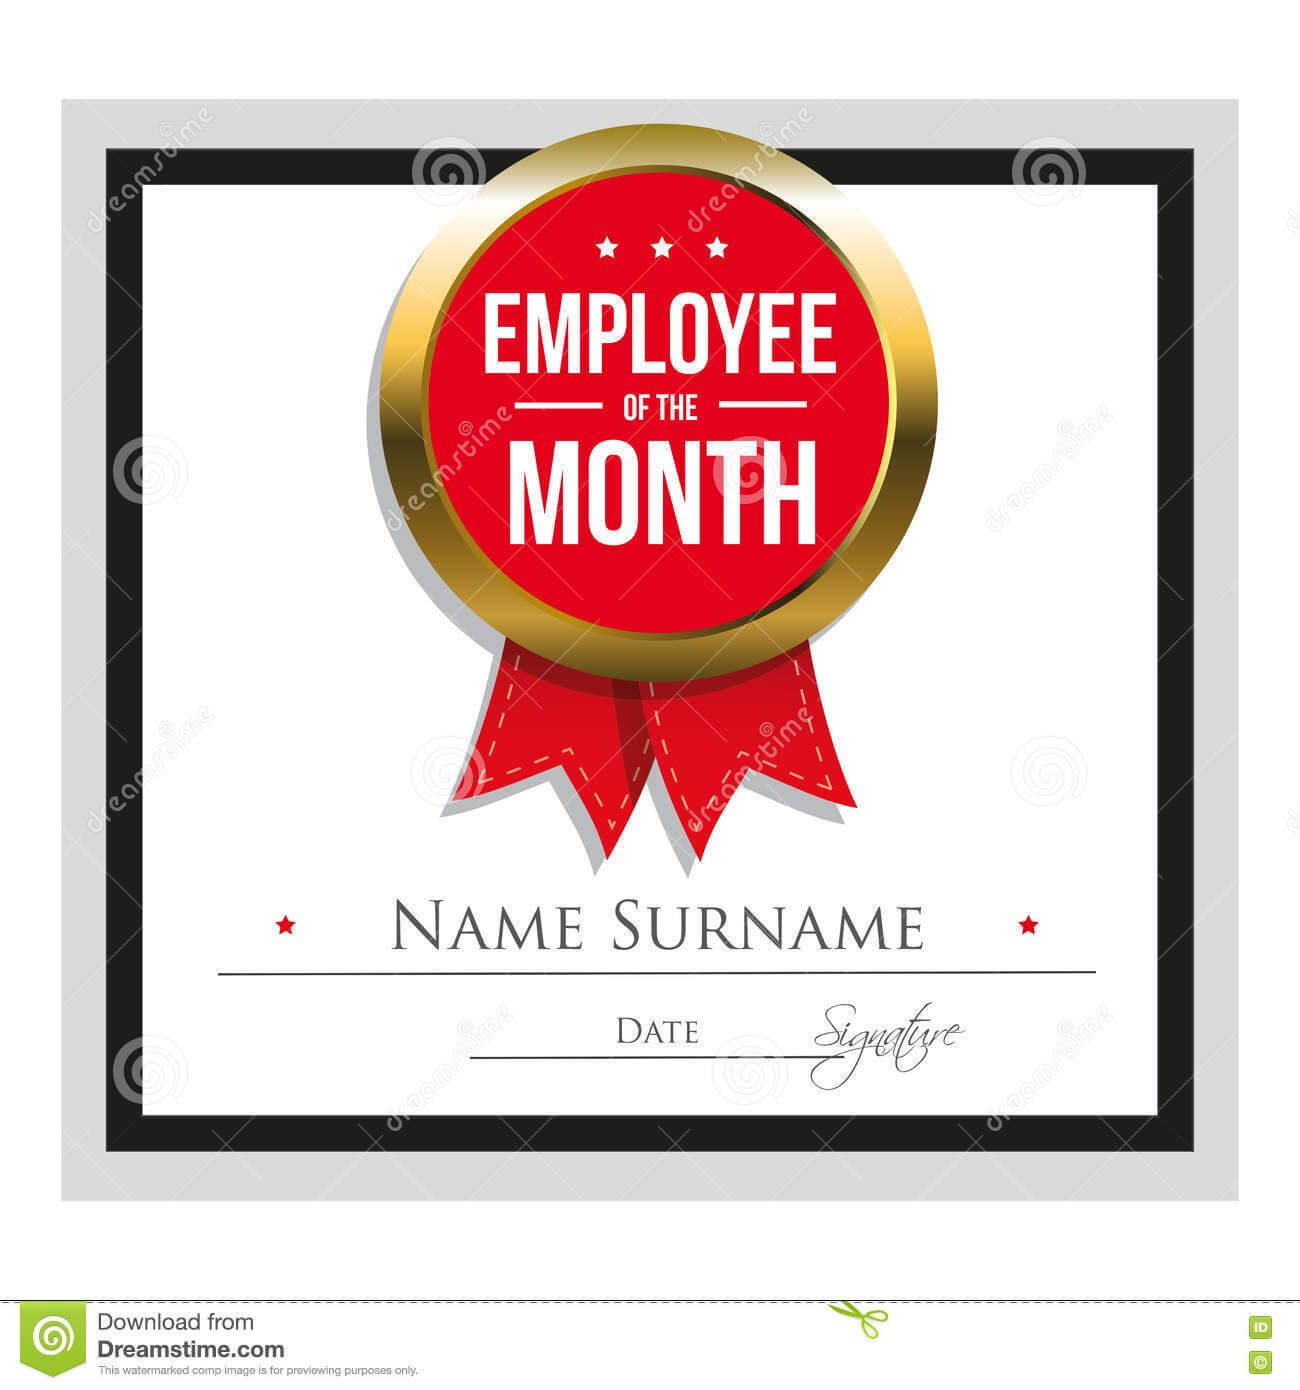 Employee Award Certificate Template Free Templates Design Regarding Employee Of The Month Certificate Template